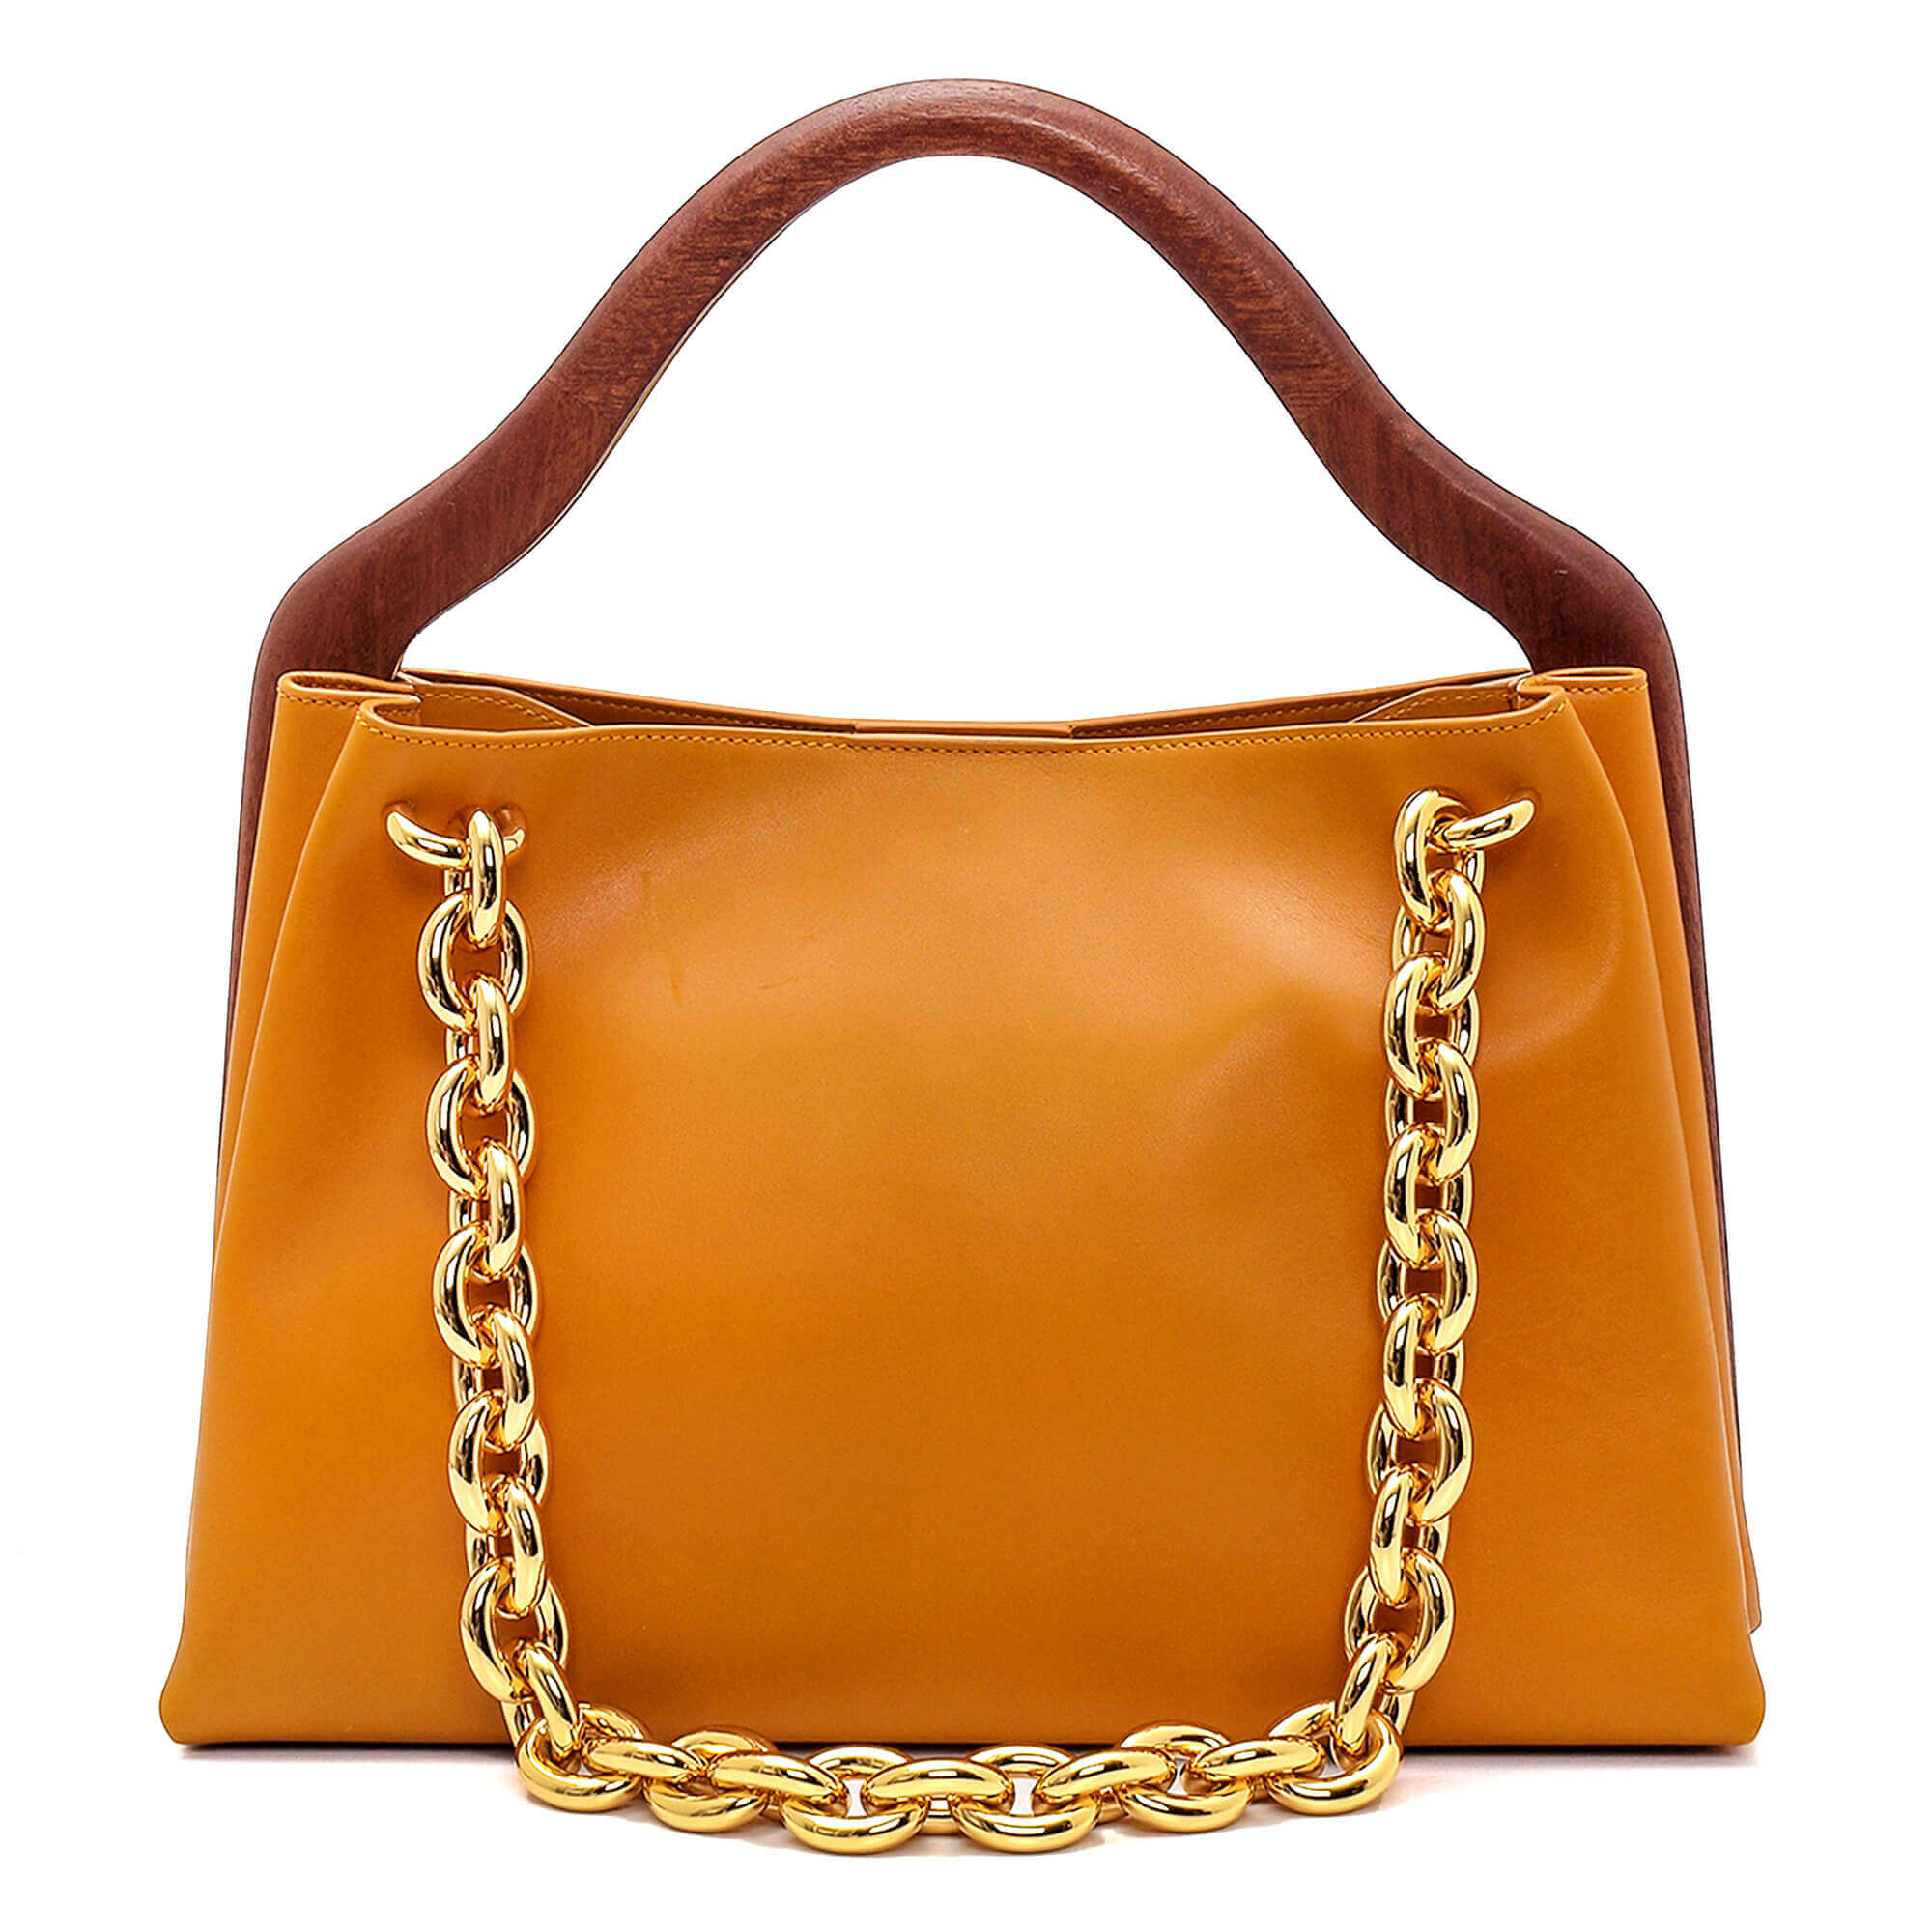 Bottega Veneta - Mustard Leather Chain Embellished Wood Tote Bag